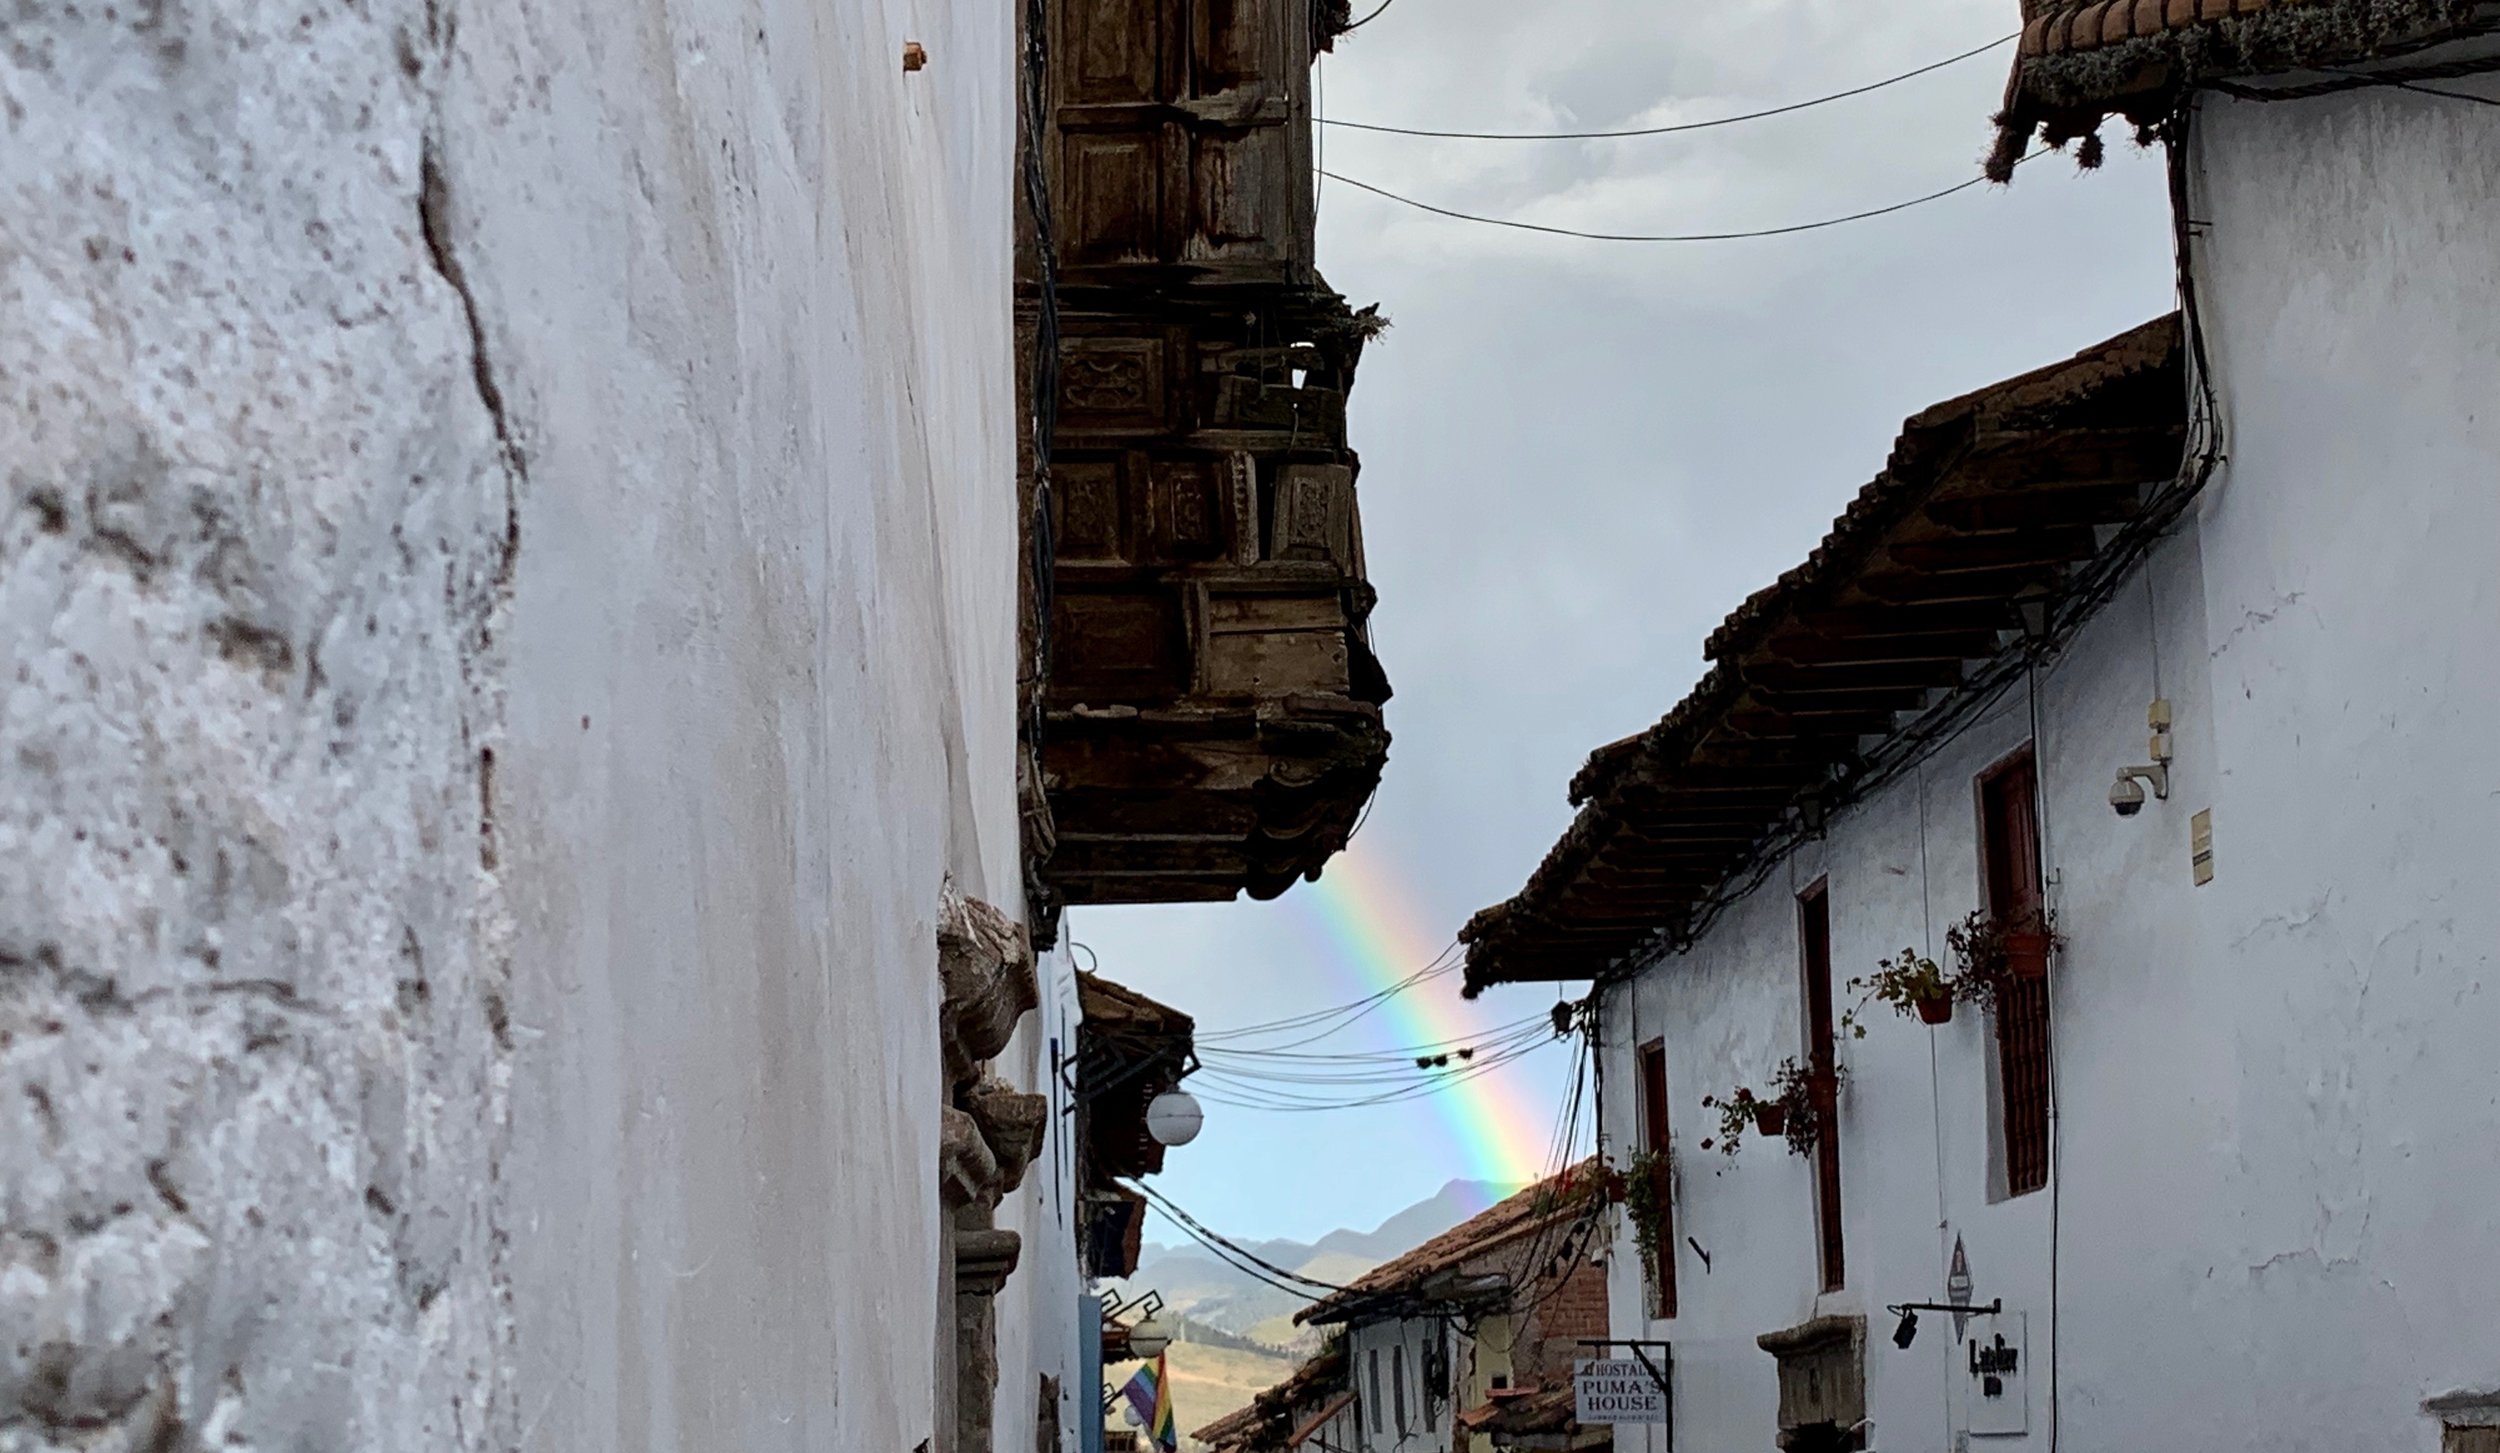 The Inca Worshipped The Rainbow